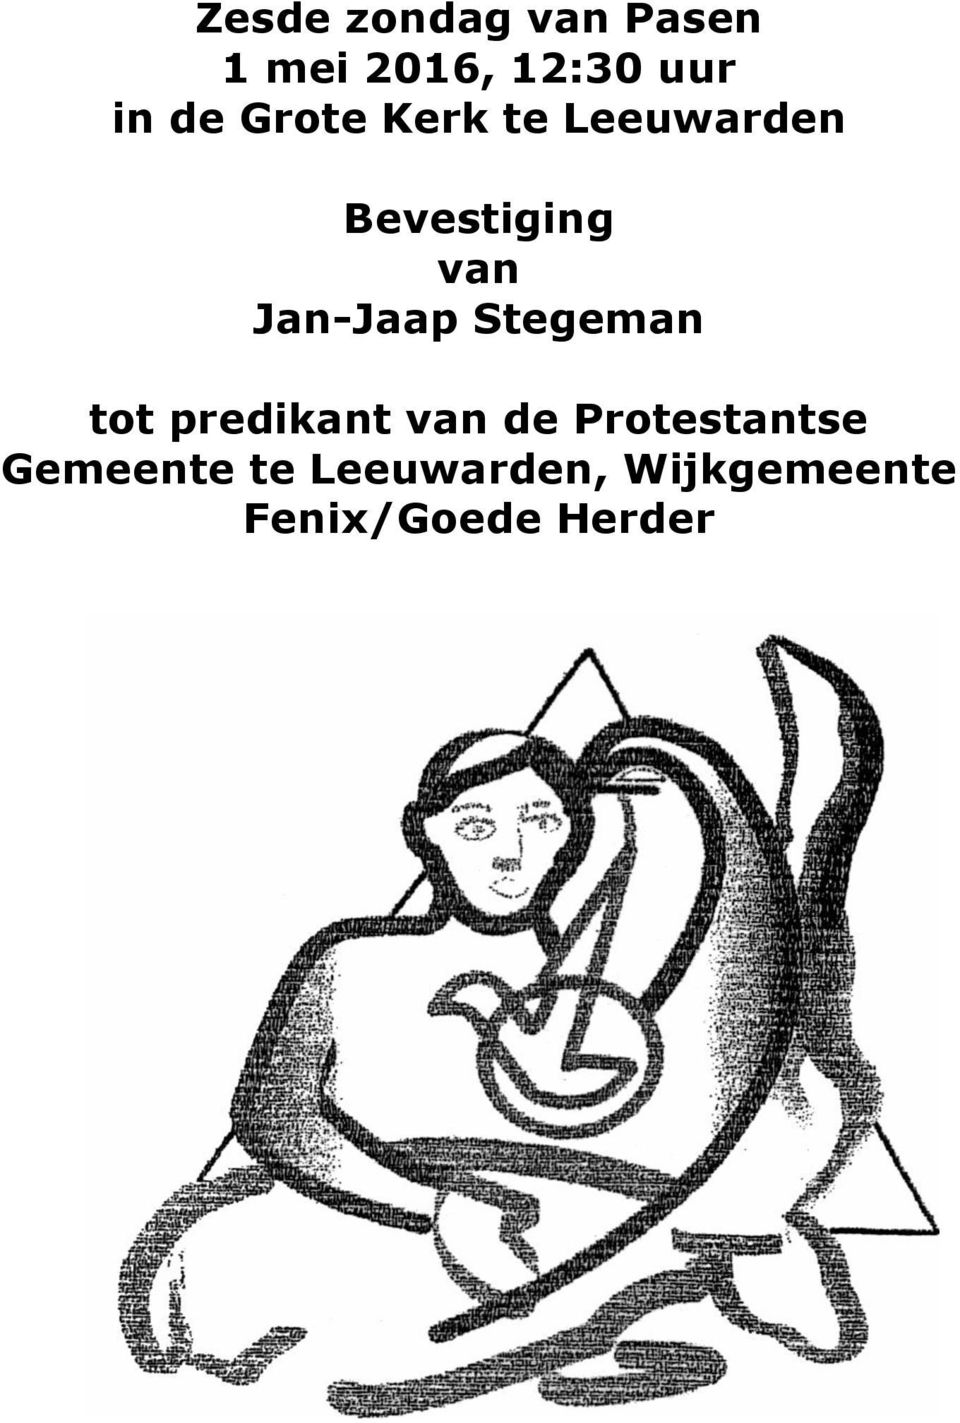 Jan-Jaap Stegeman tot predikant van de